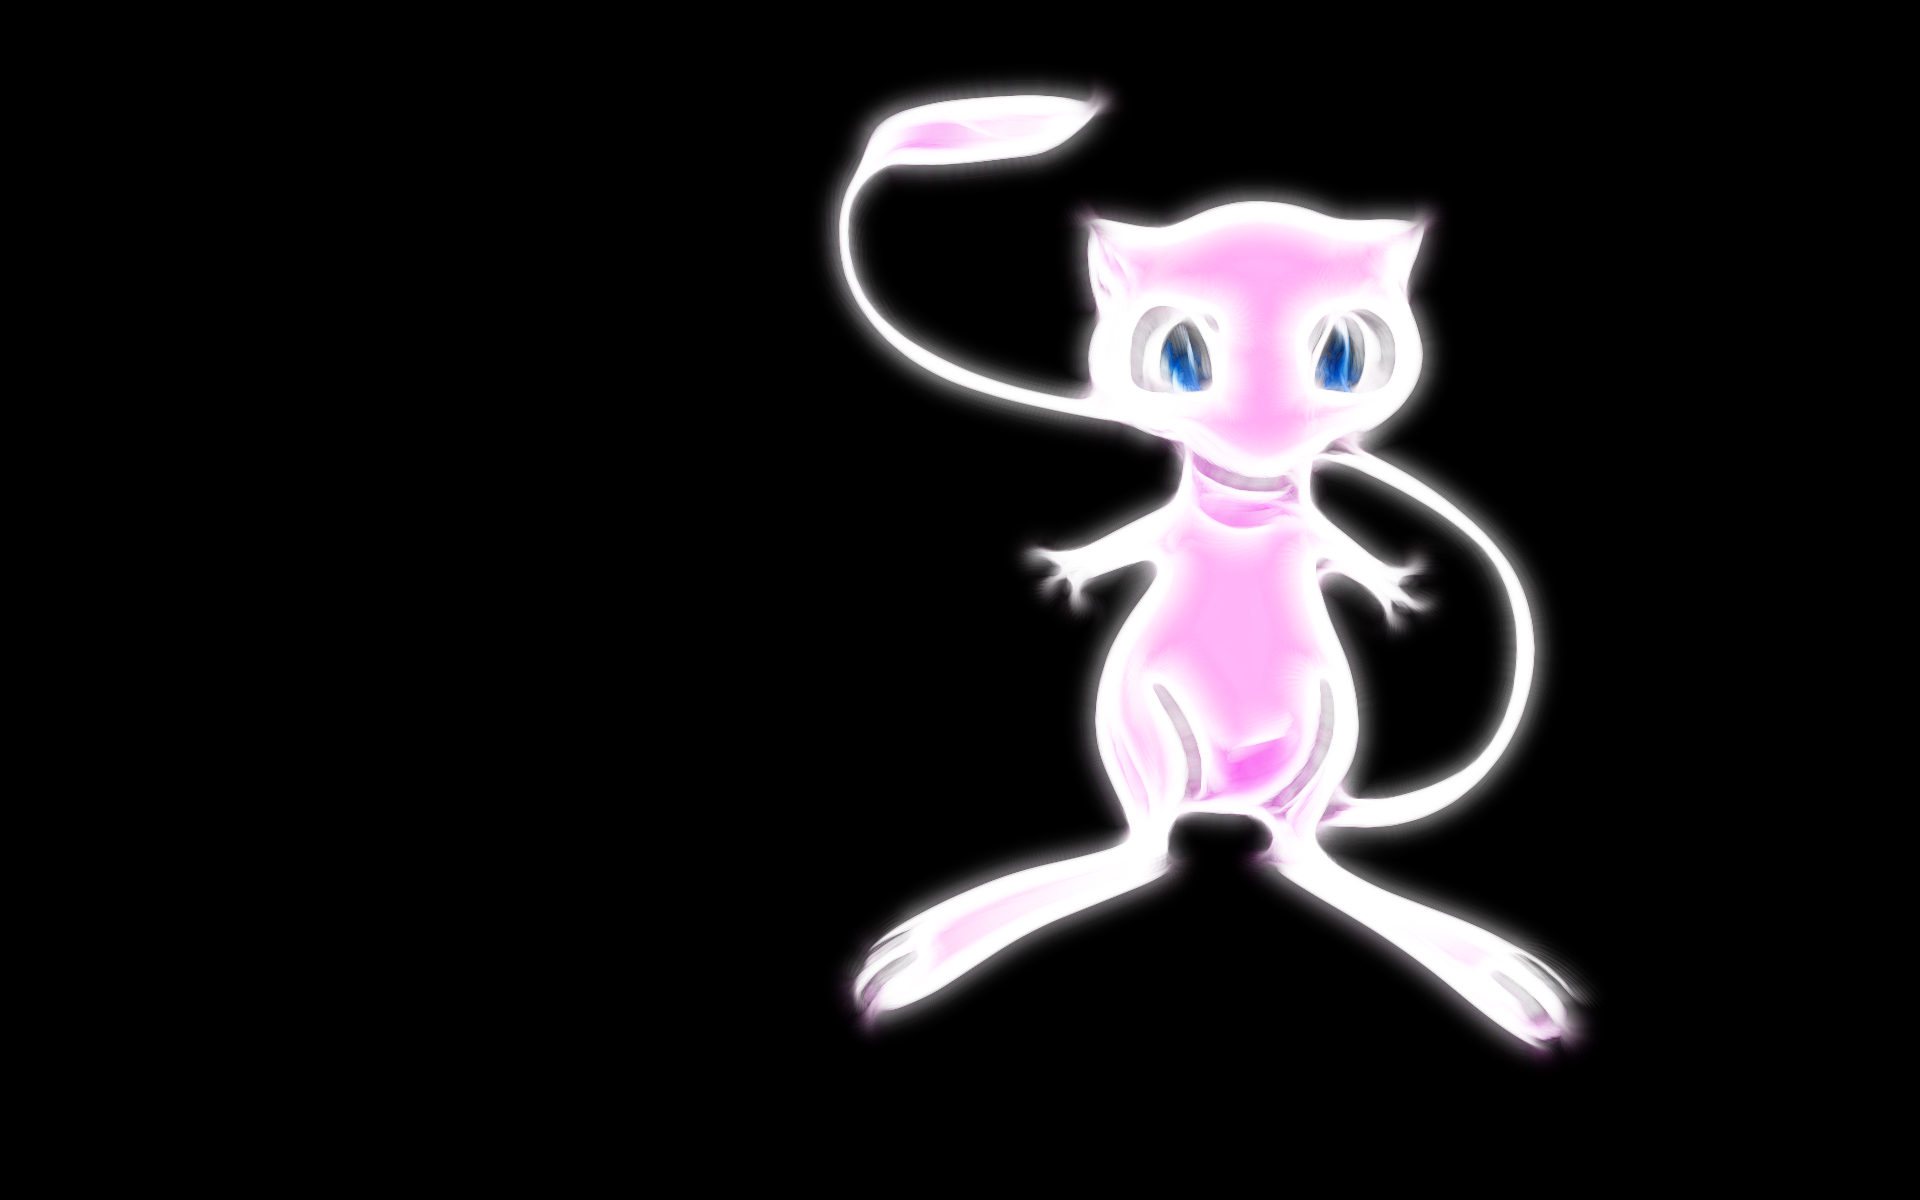 Mew, a cute and legendary Pokémon in high-definition desktop wallpaper.